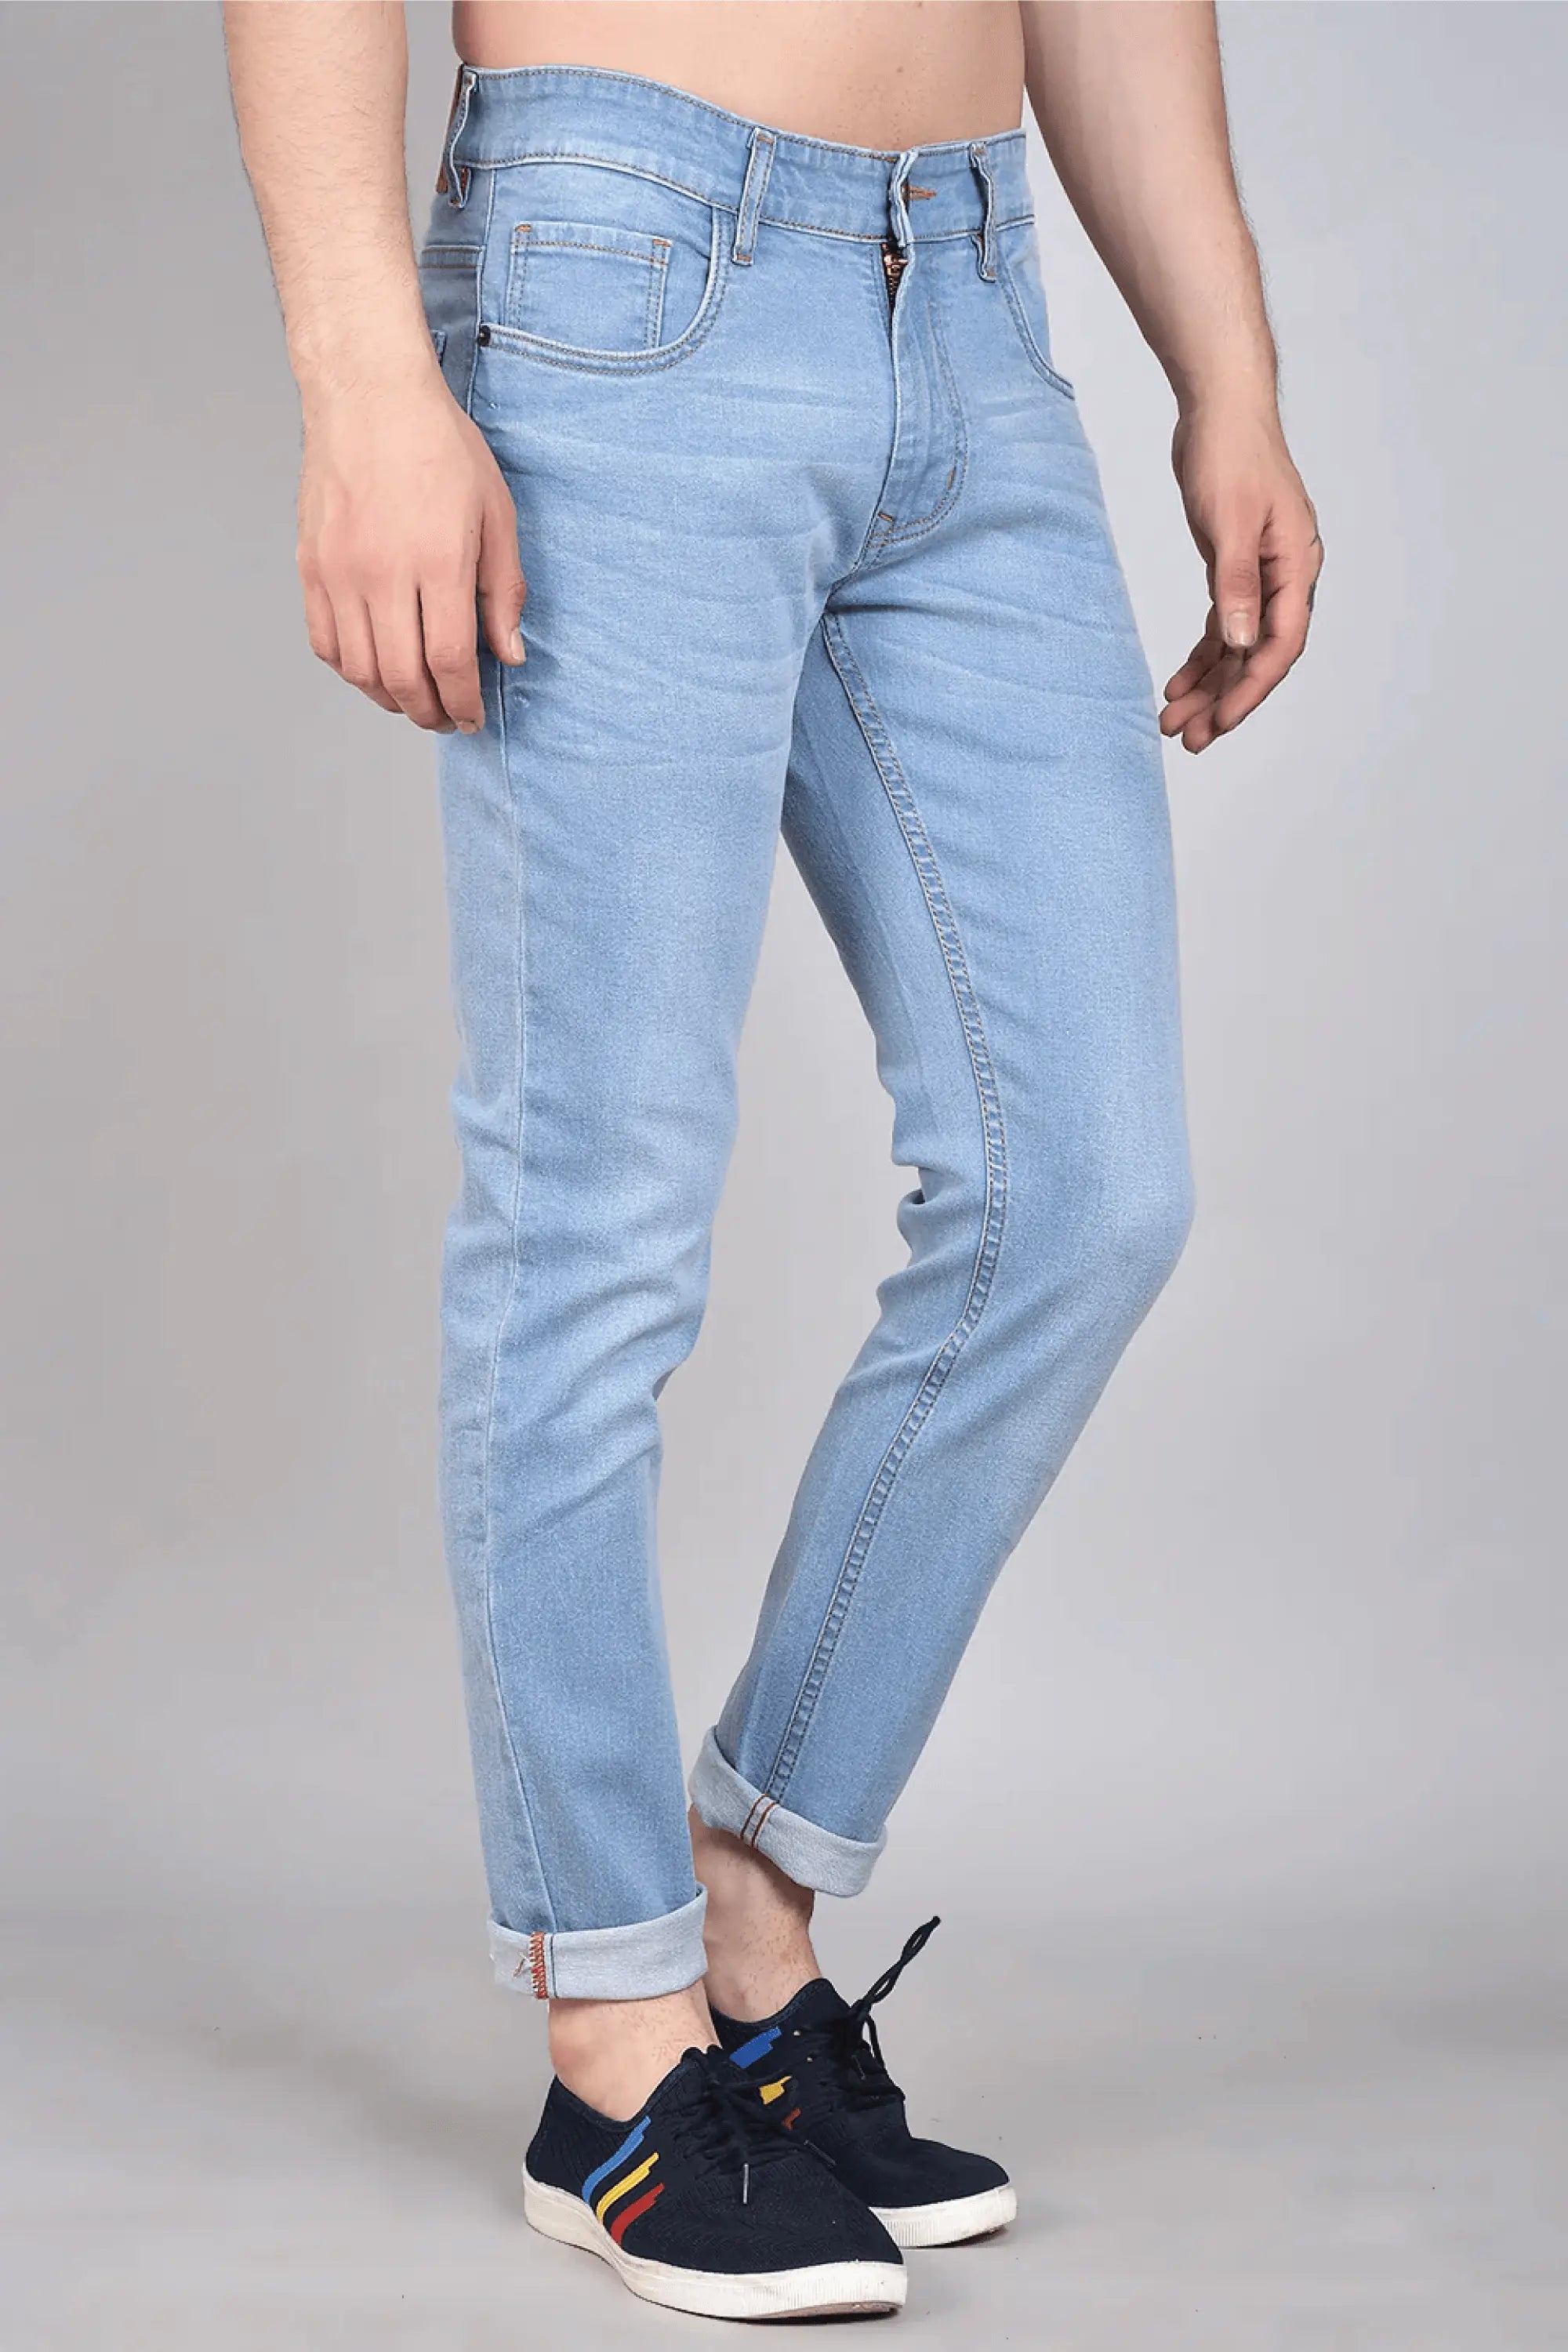 Buy ZONIRY INDIA Men's Sky Blue Denim New Look Jeans 36 at Amazon.in